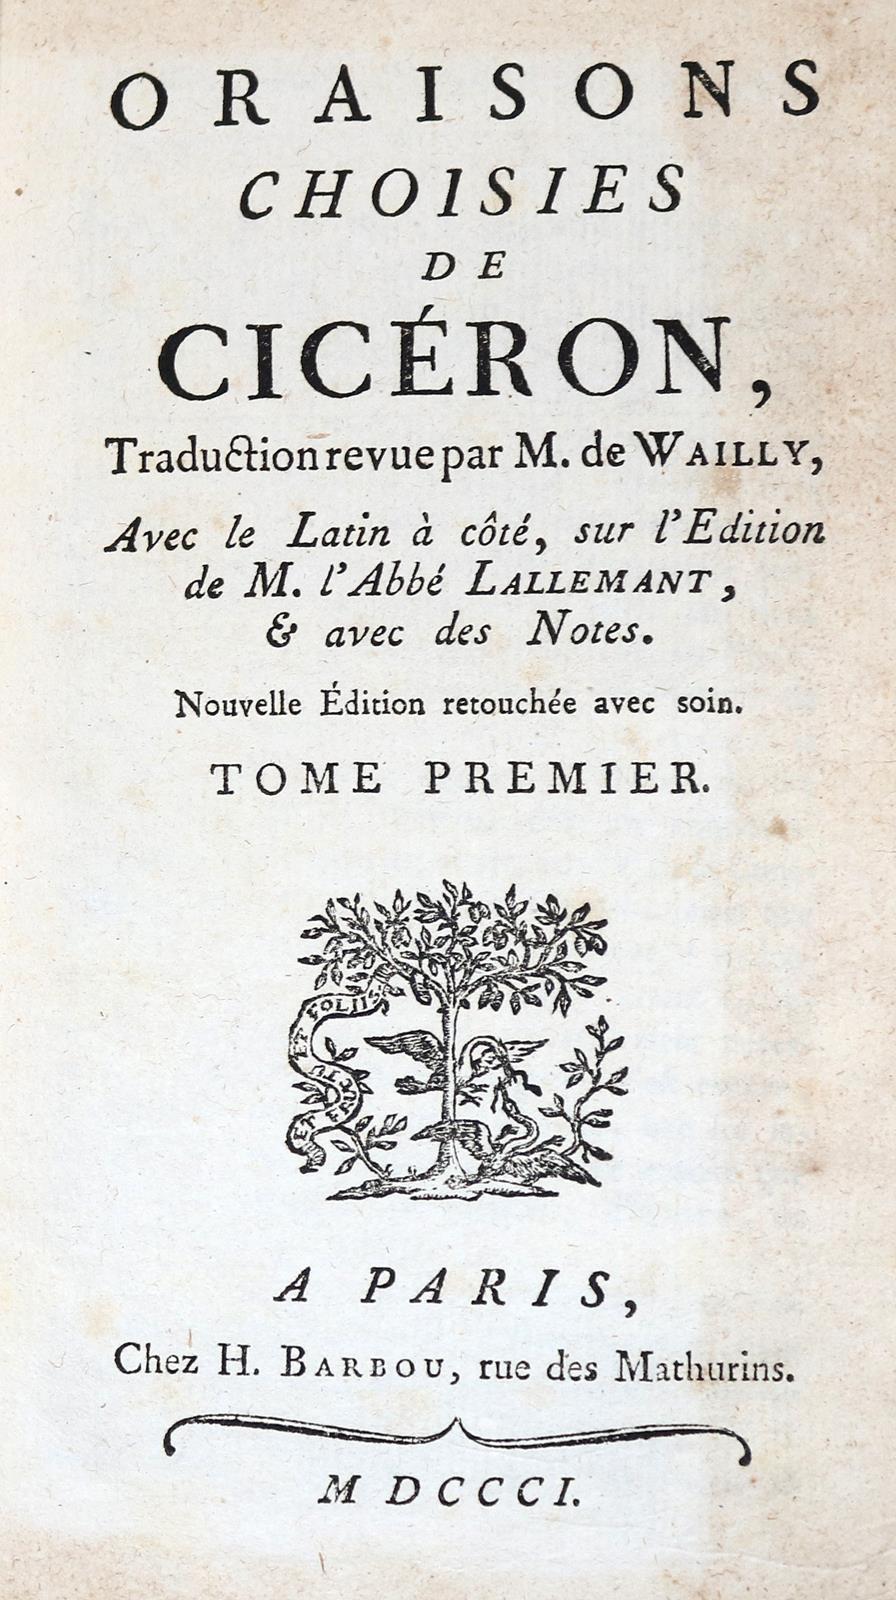 Cicero,M.T. | Bild Nr.2